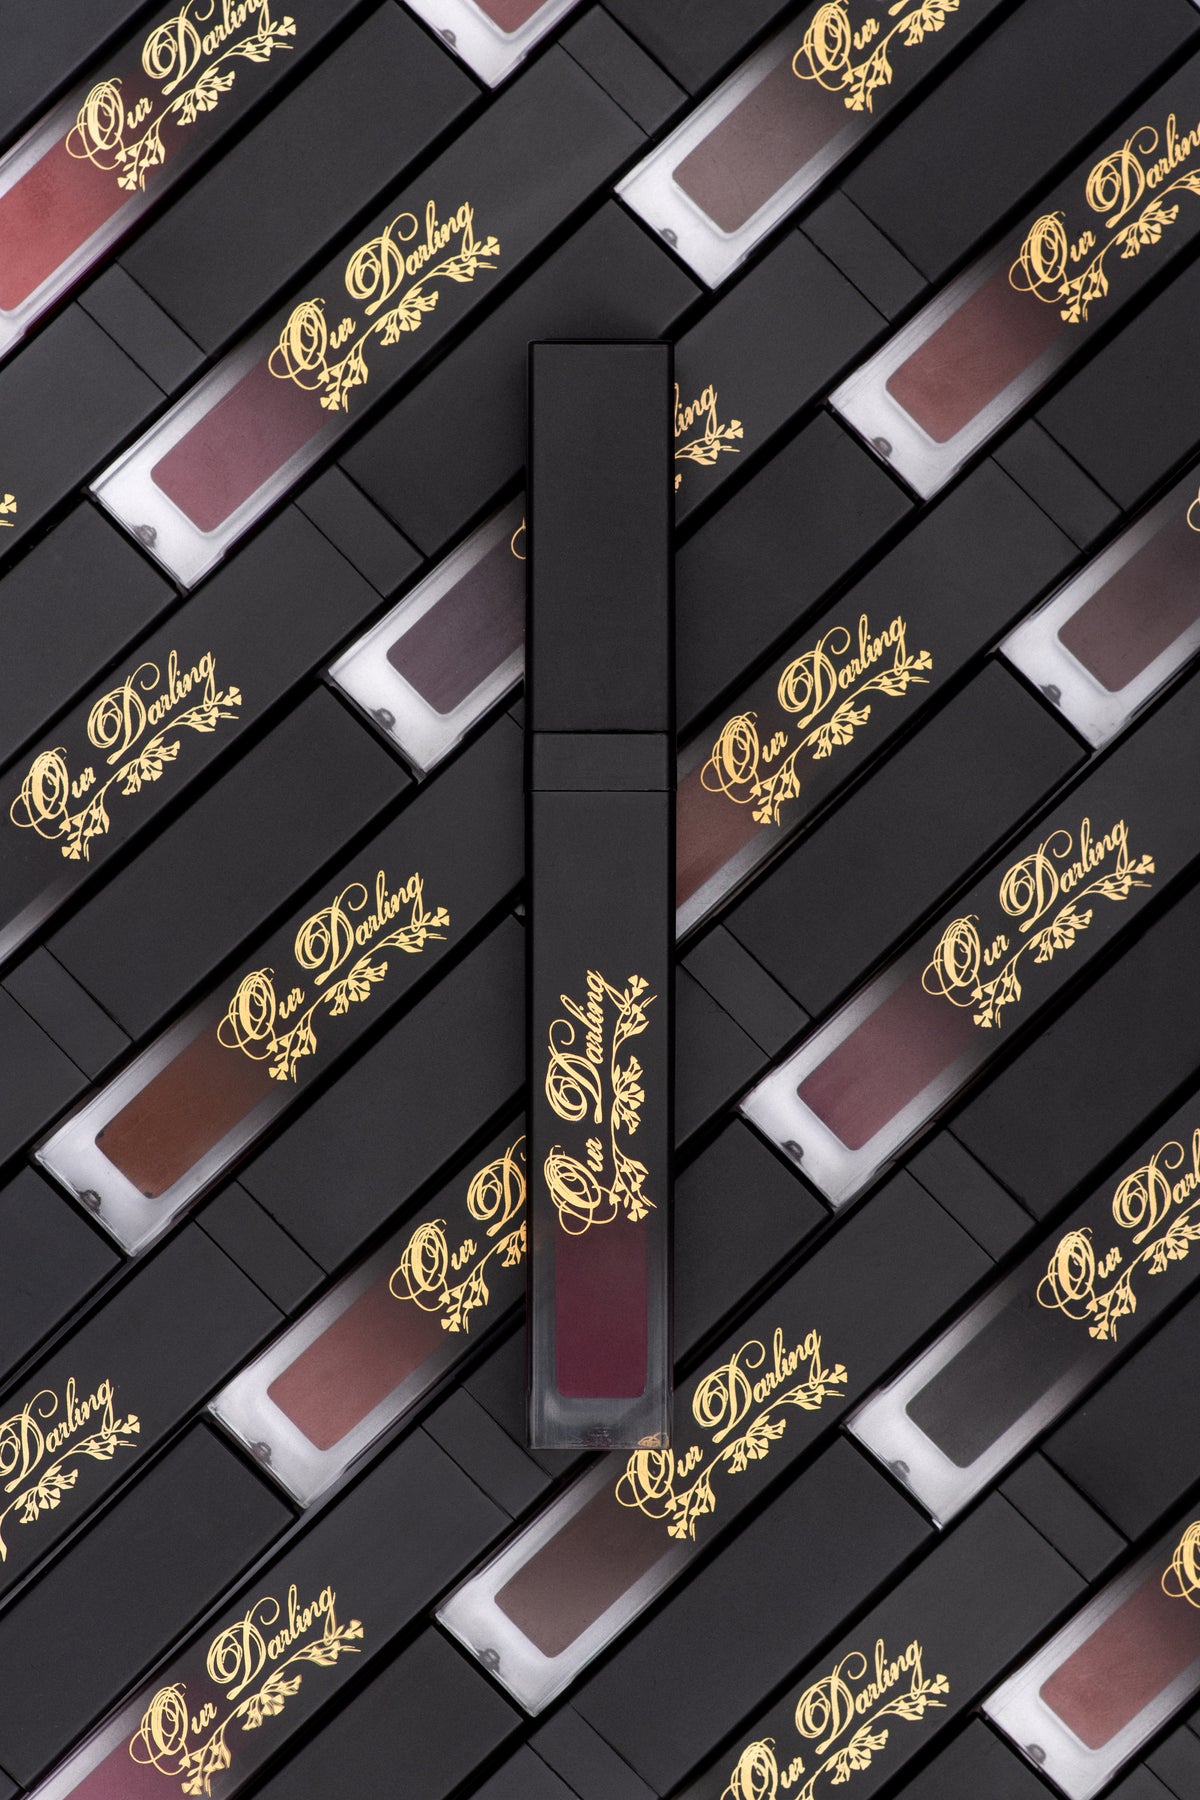 Our Darling Liquid Lipstick